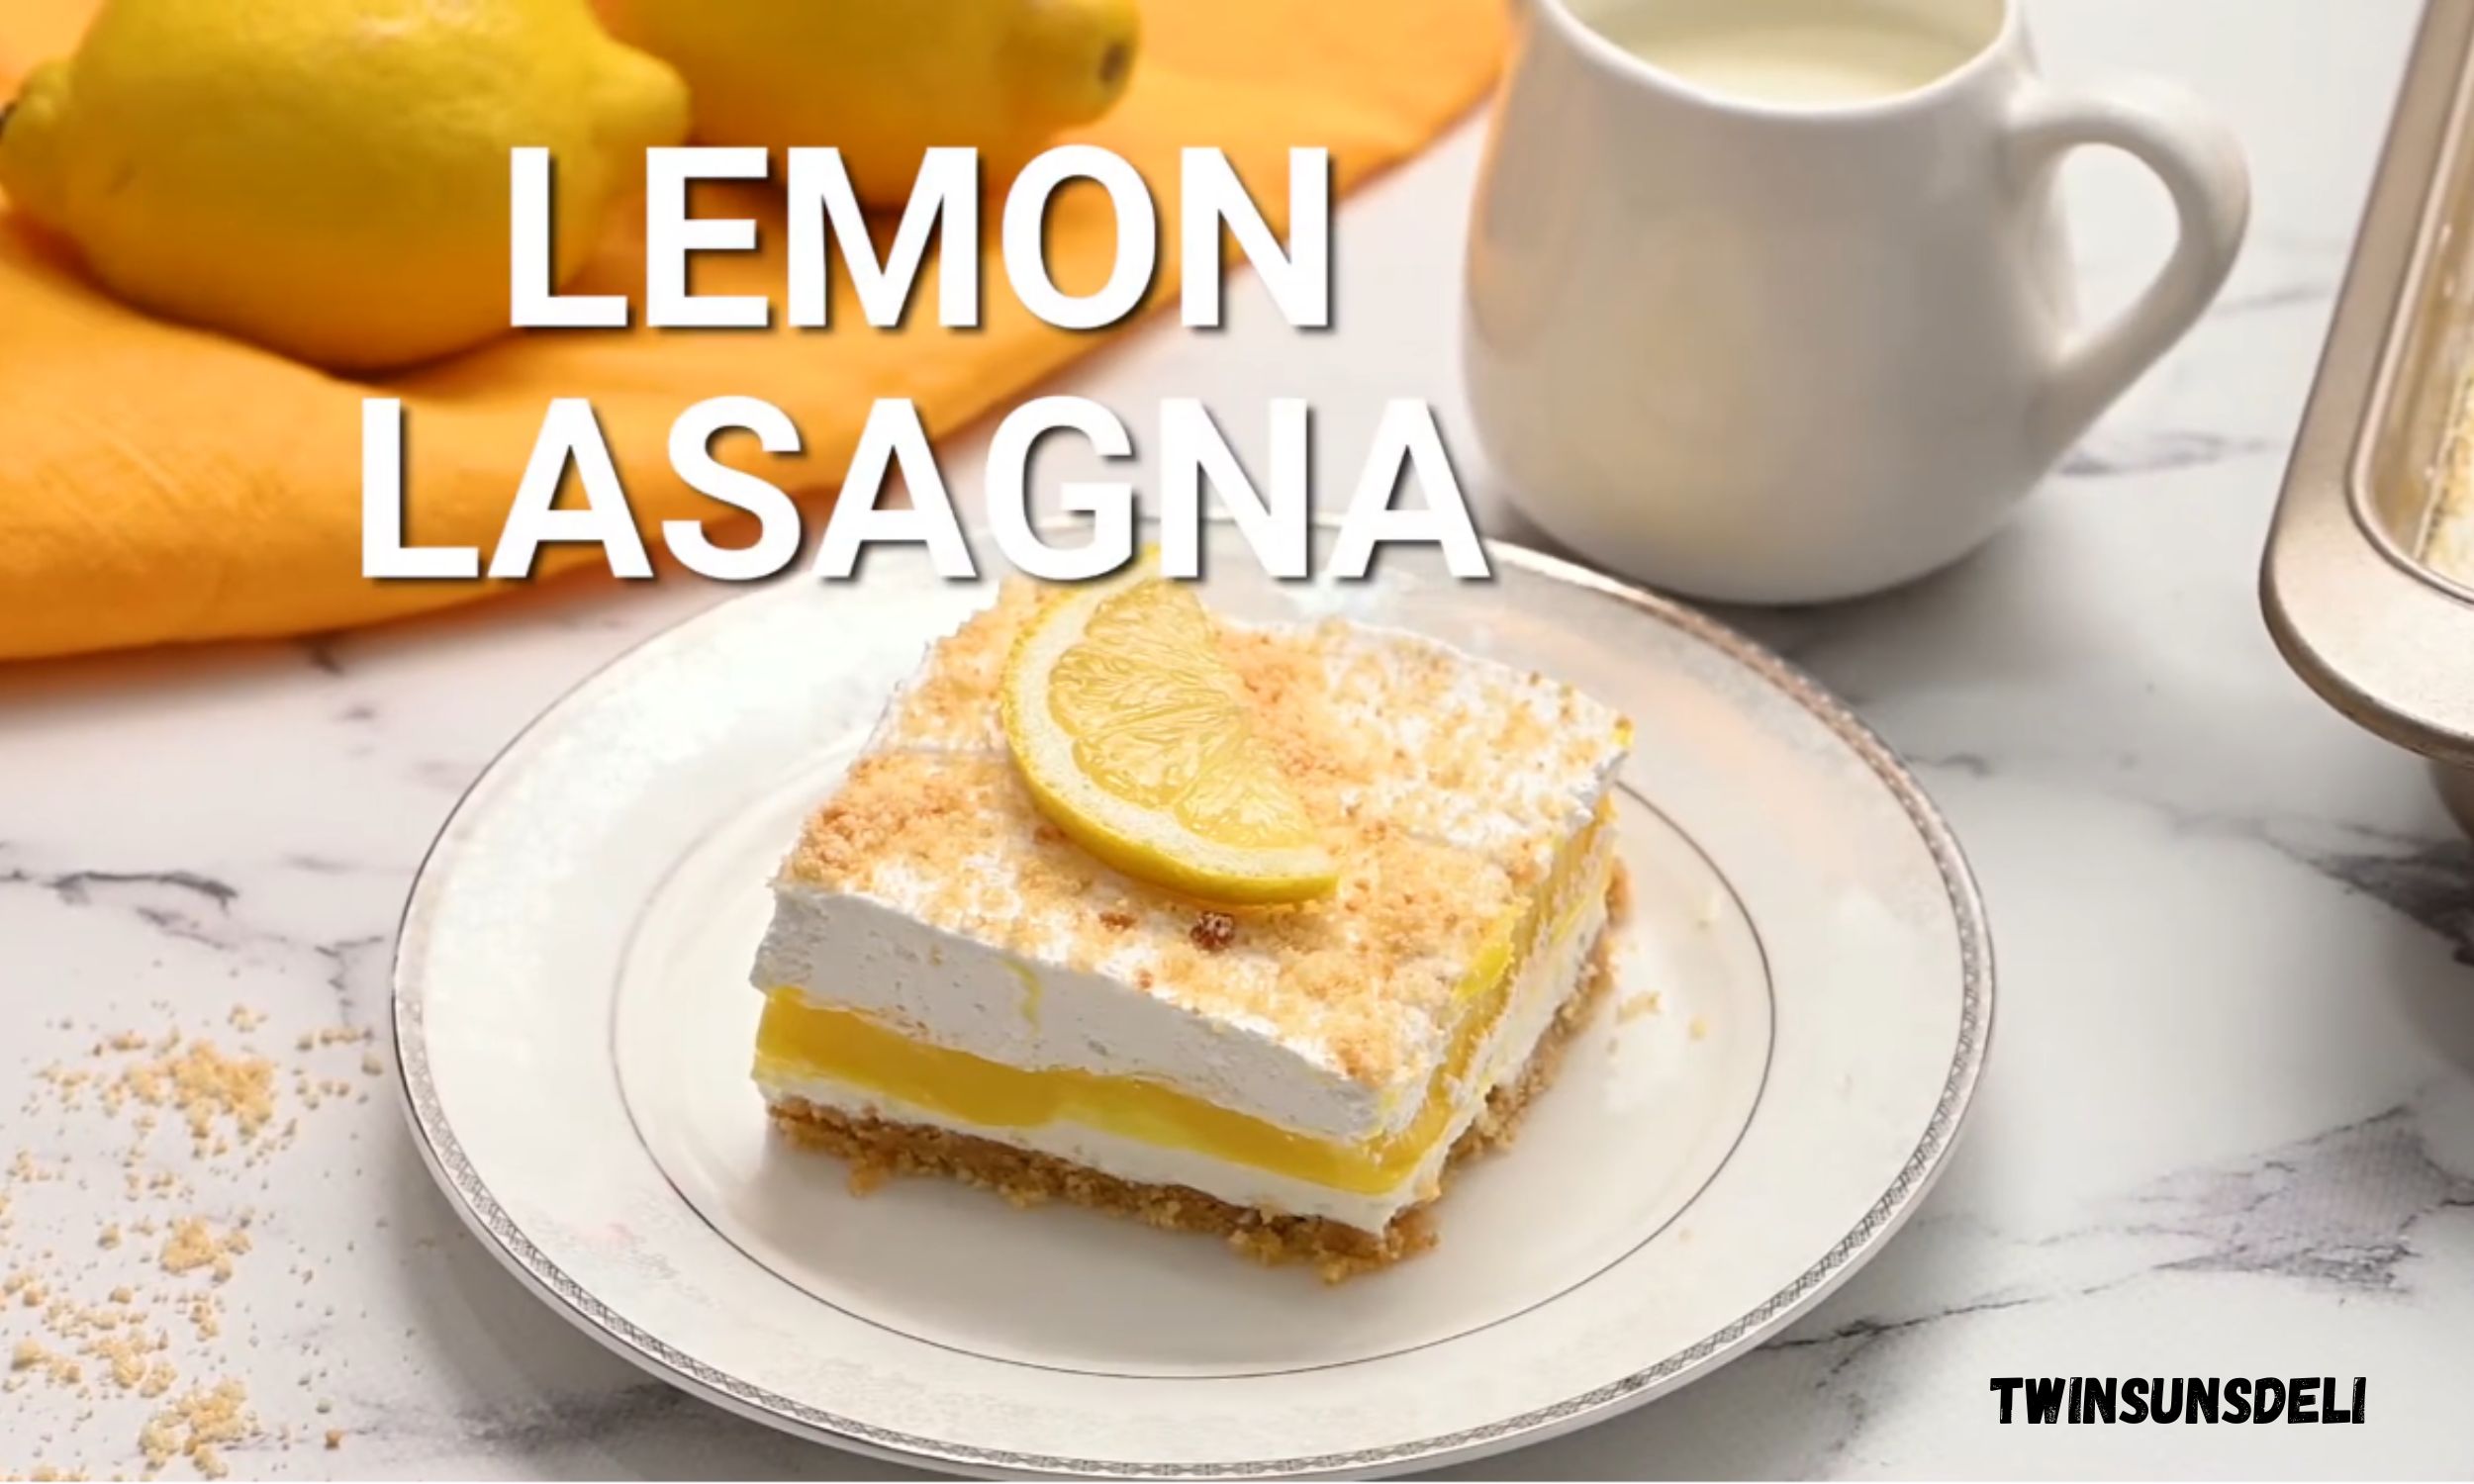 Lemon lasagna recipe